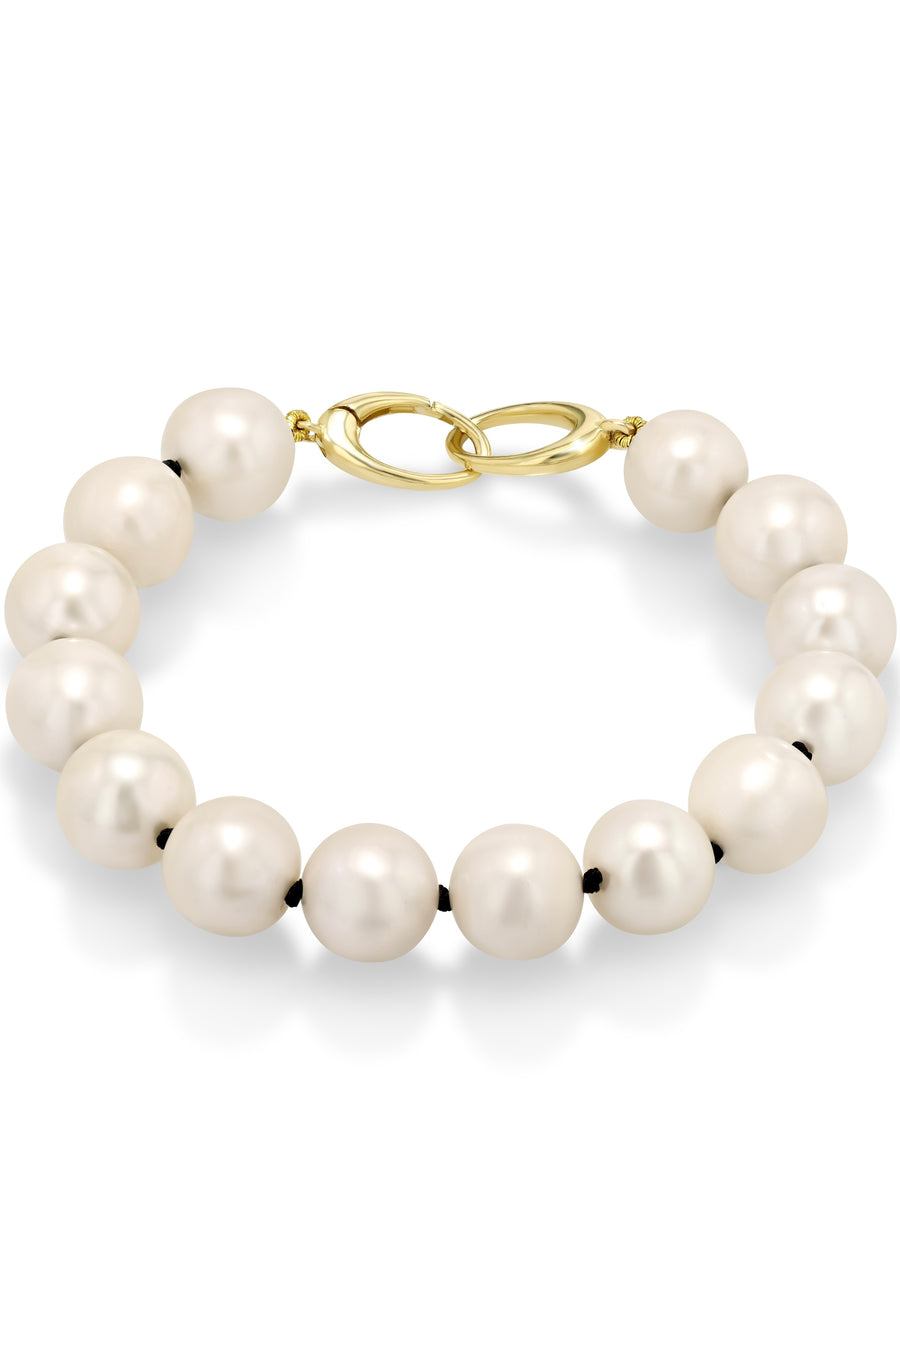 White Pearl Bracelet - 18K Gold